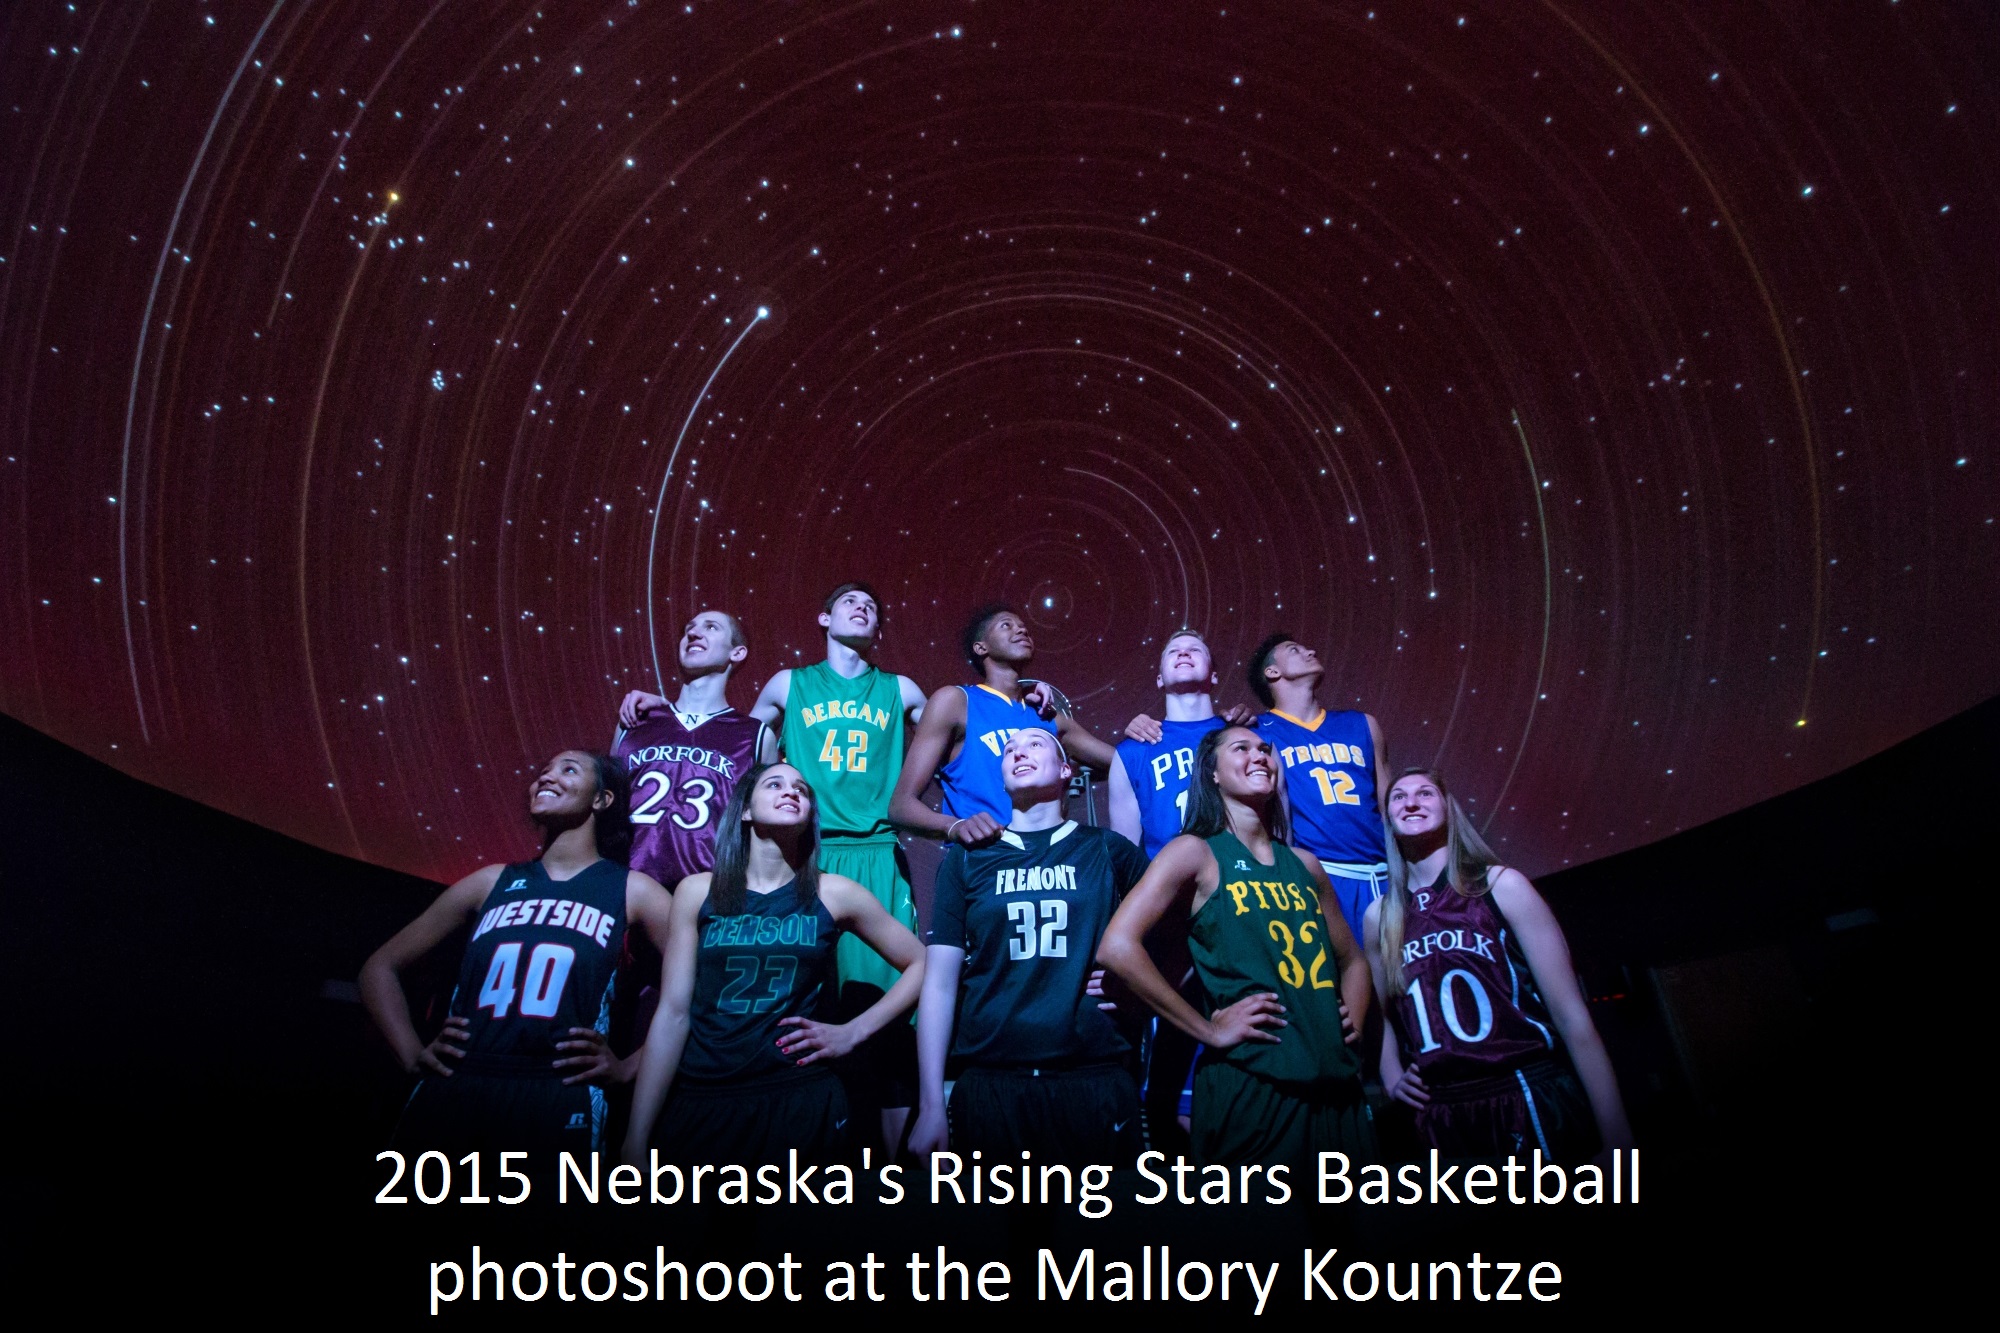 2015 Nebraska's Rising Stars Basketball photoshoot at the Planetarium